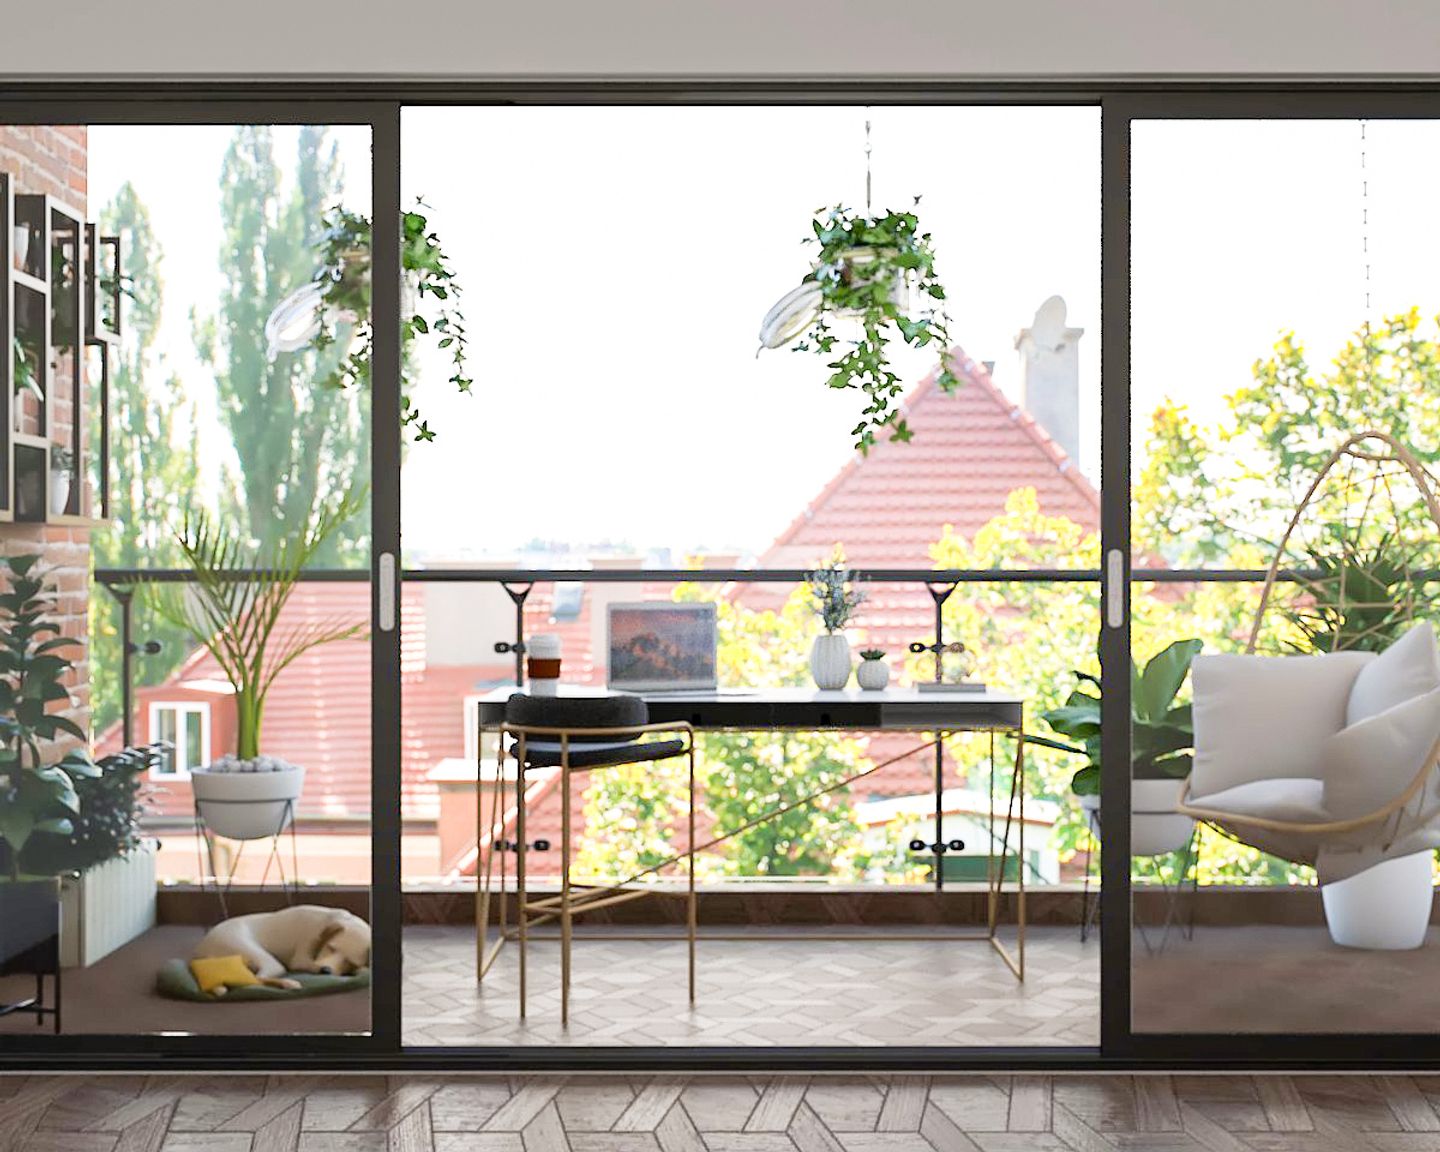 Balcony Design With Brick Wall - Livspace